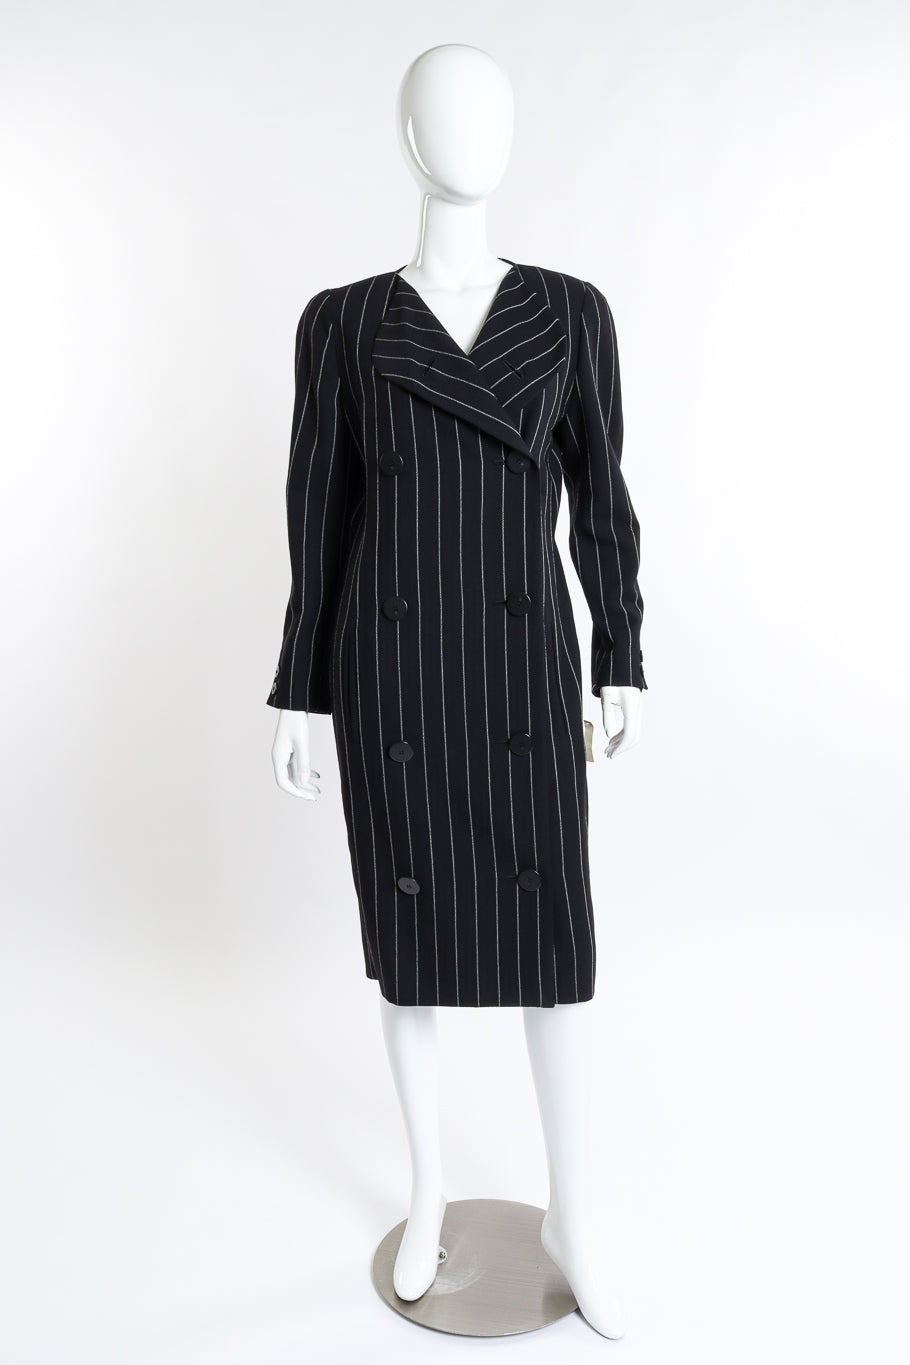 Vintage Krizia Pinstripe Double Breasted Blazer Dress front on mannequin @recess la